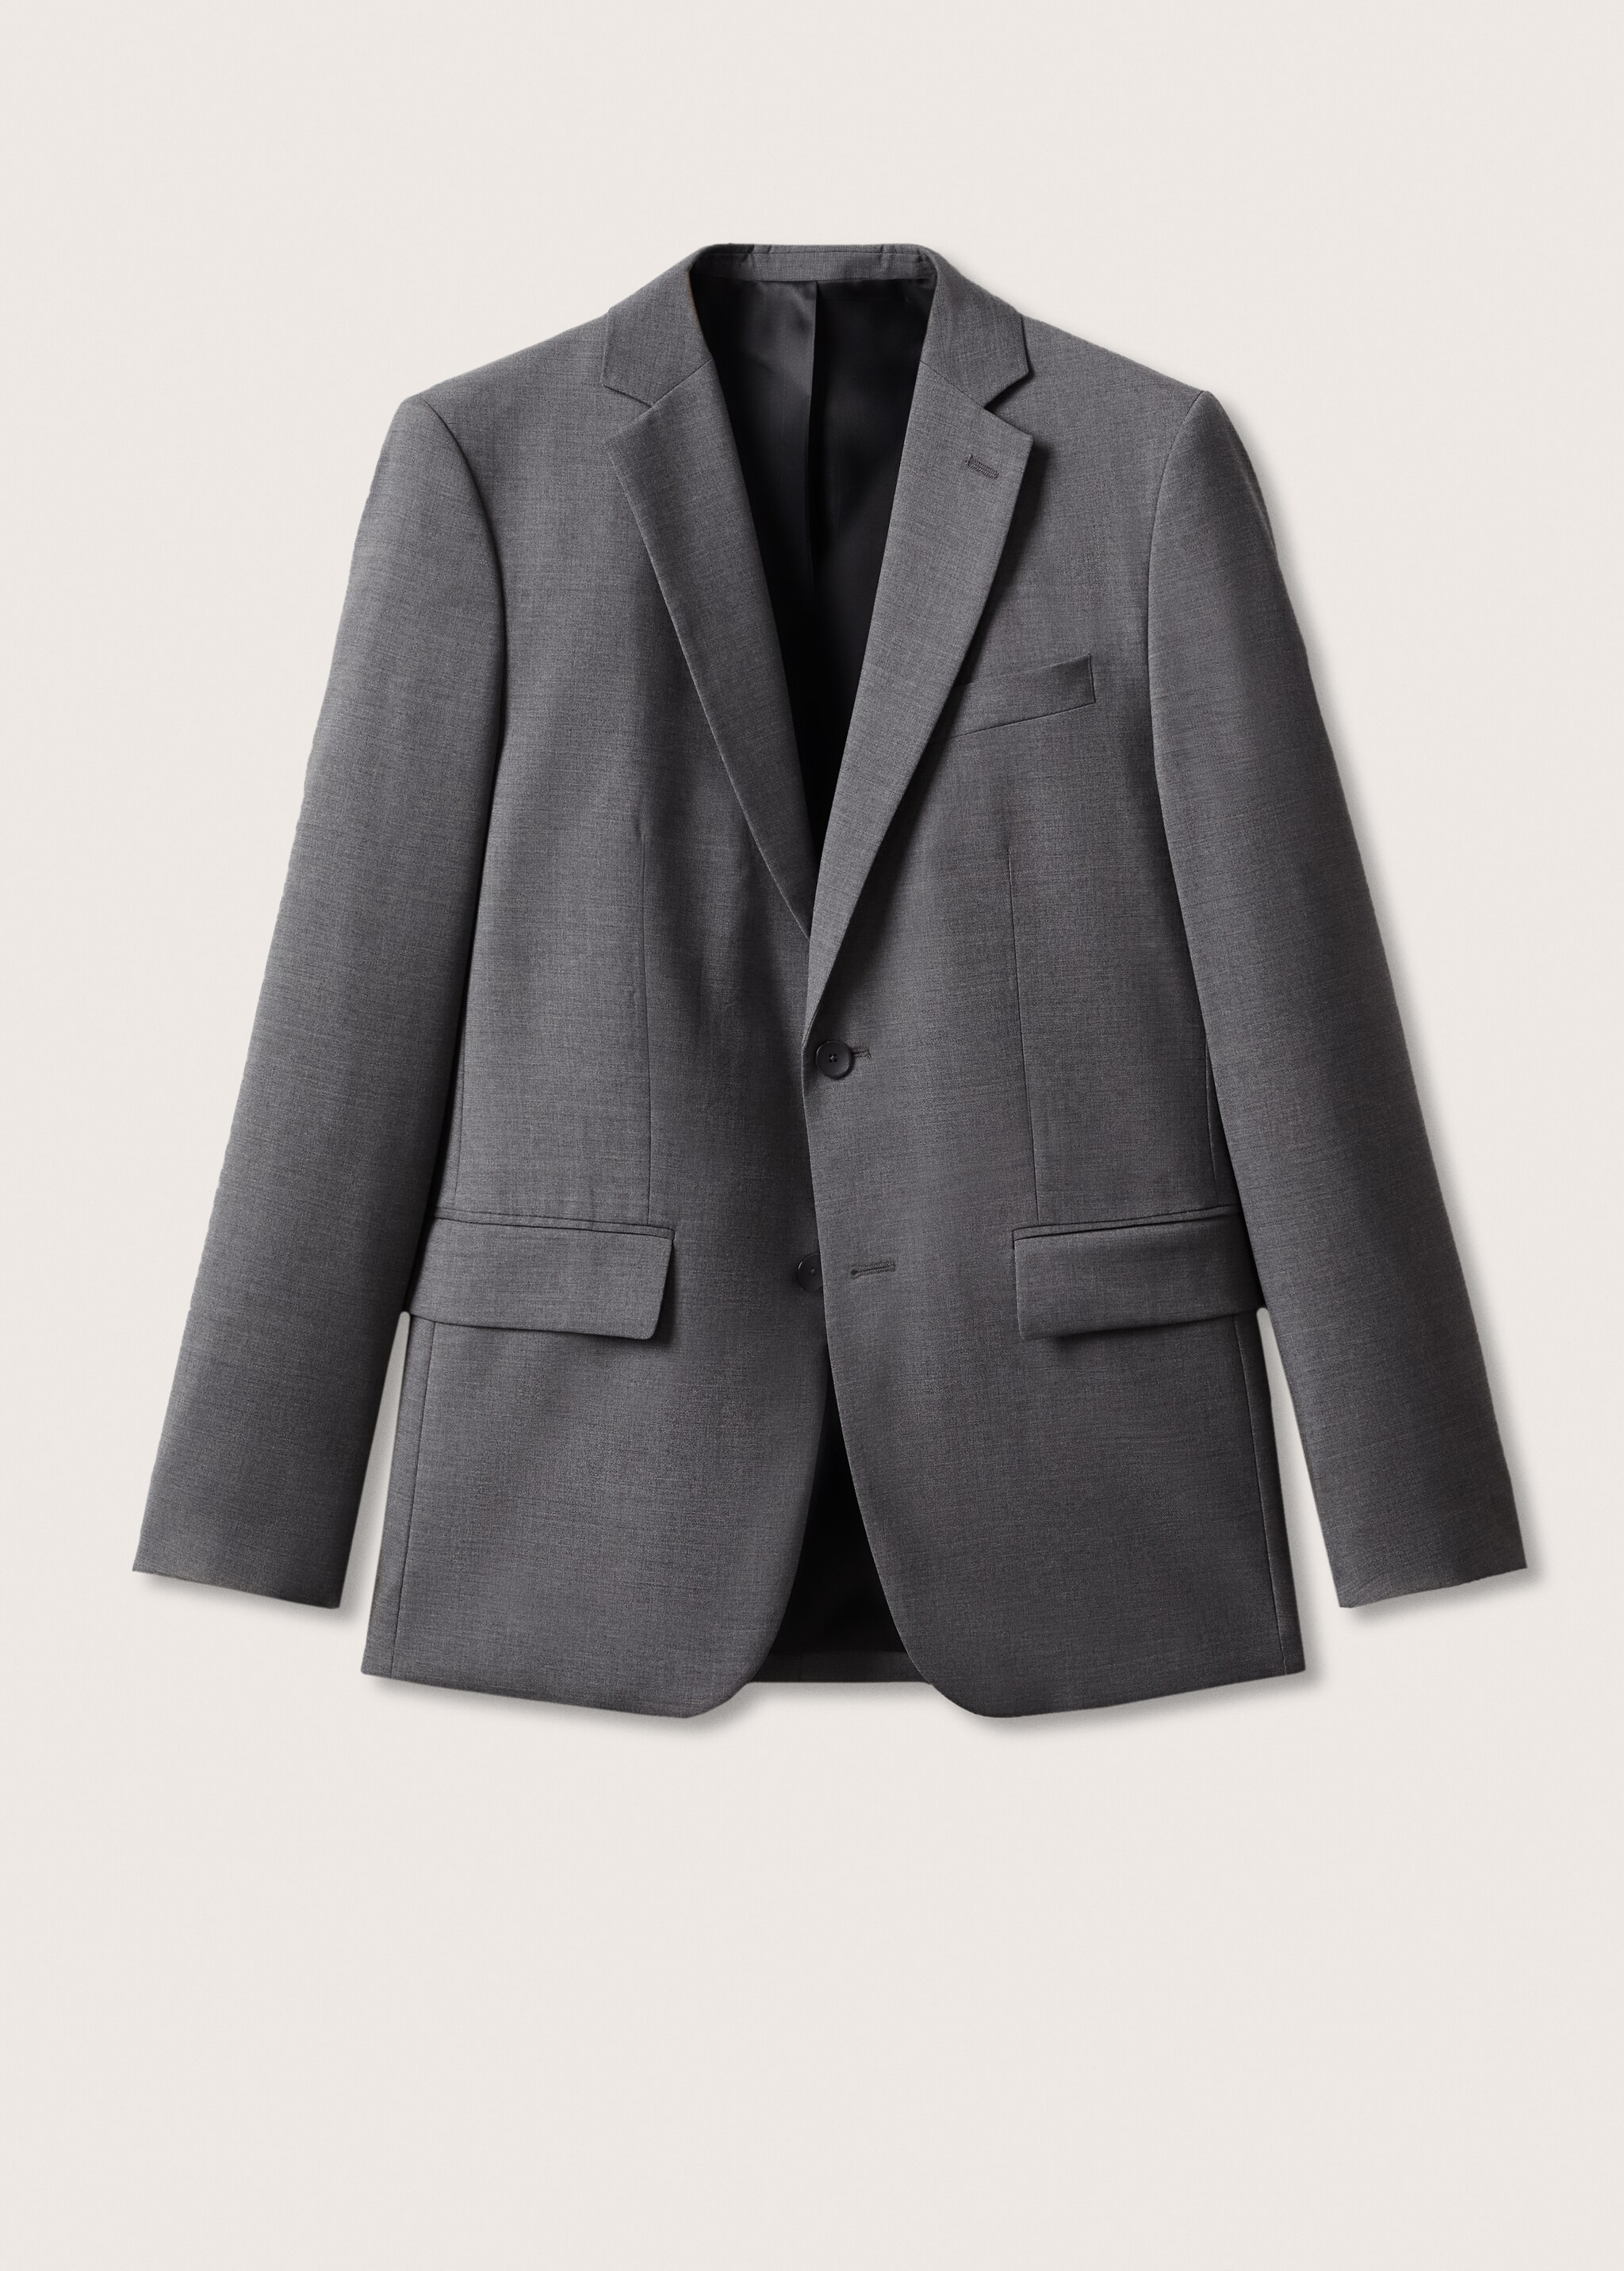 Slim fit virgin wool suit blazer - Article without model